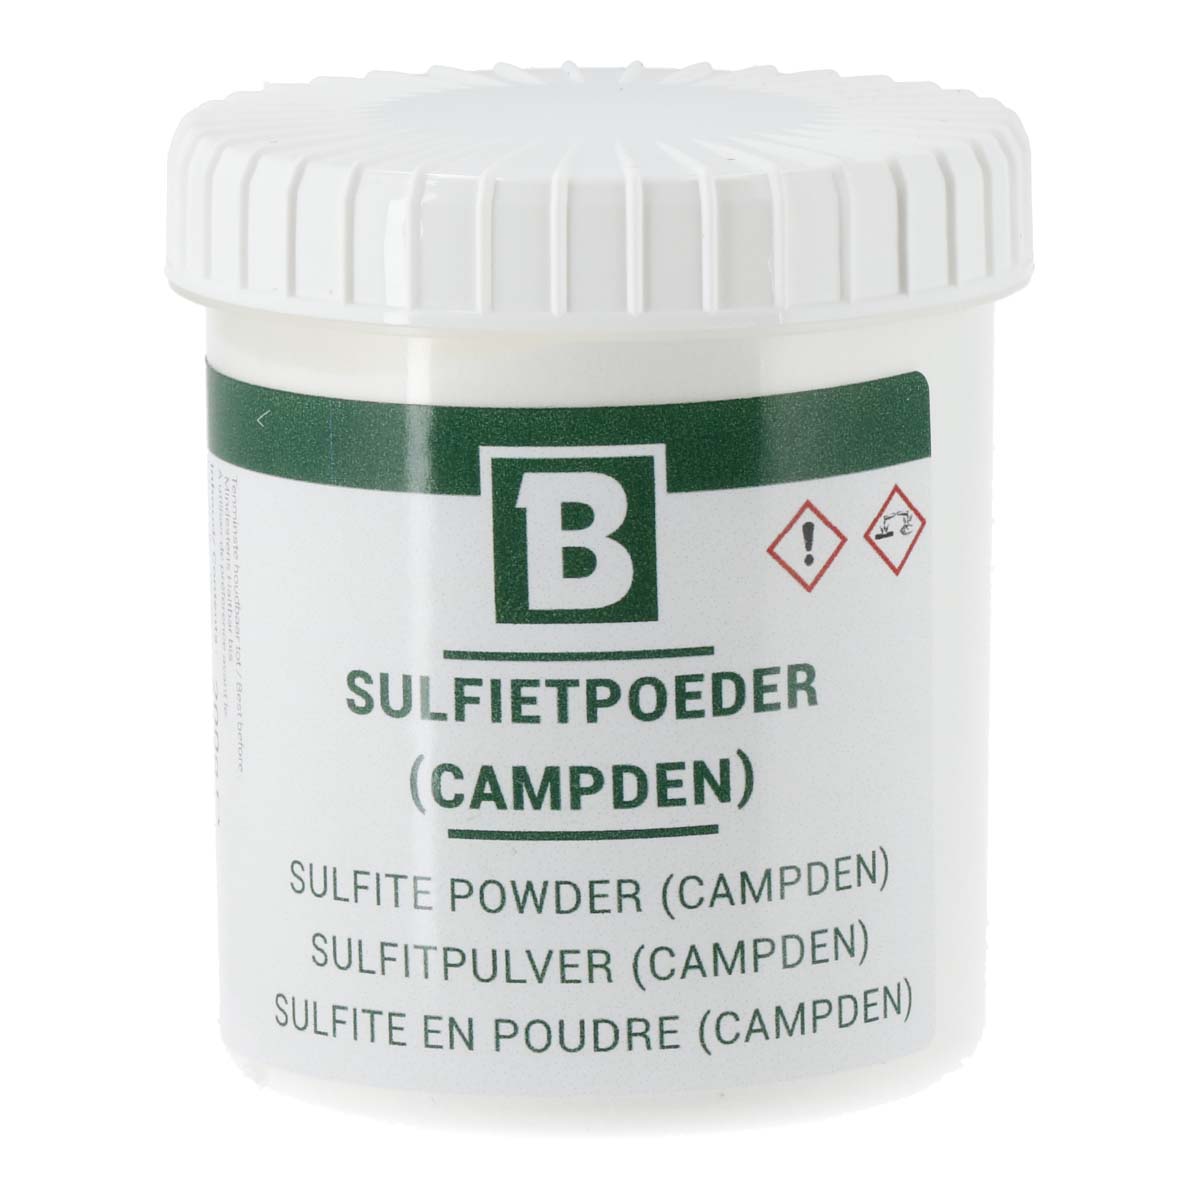 Sulfite powder (Campden) 150 gr